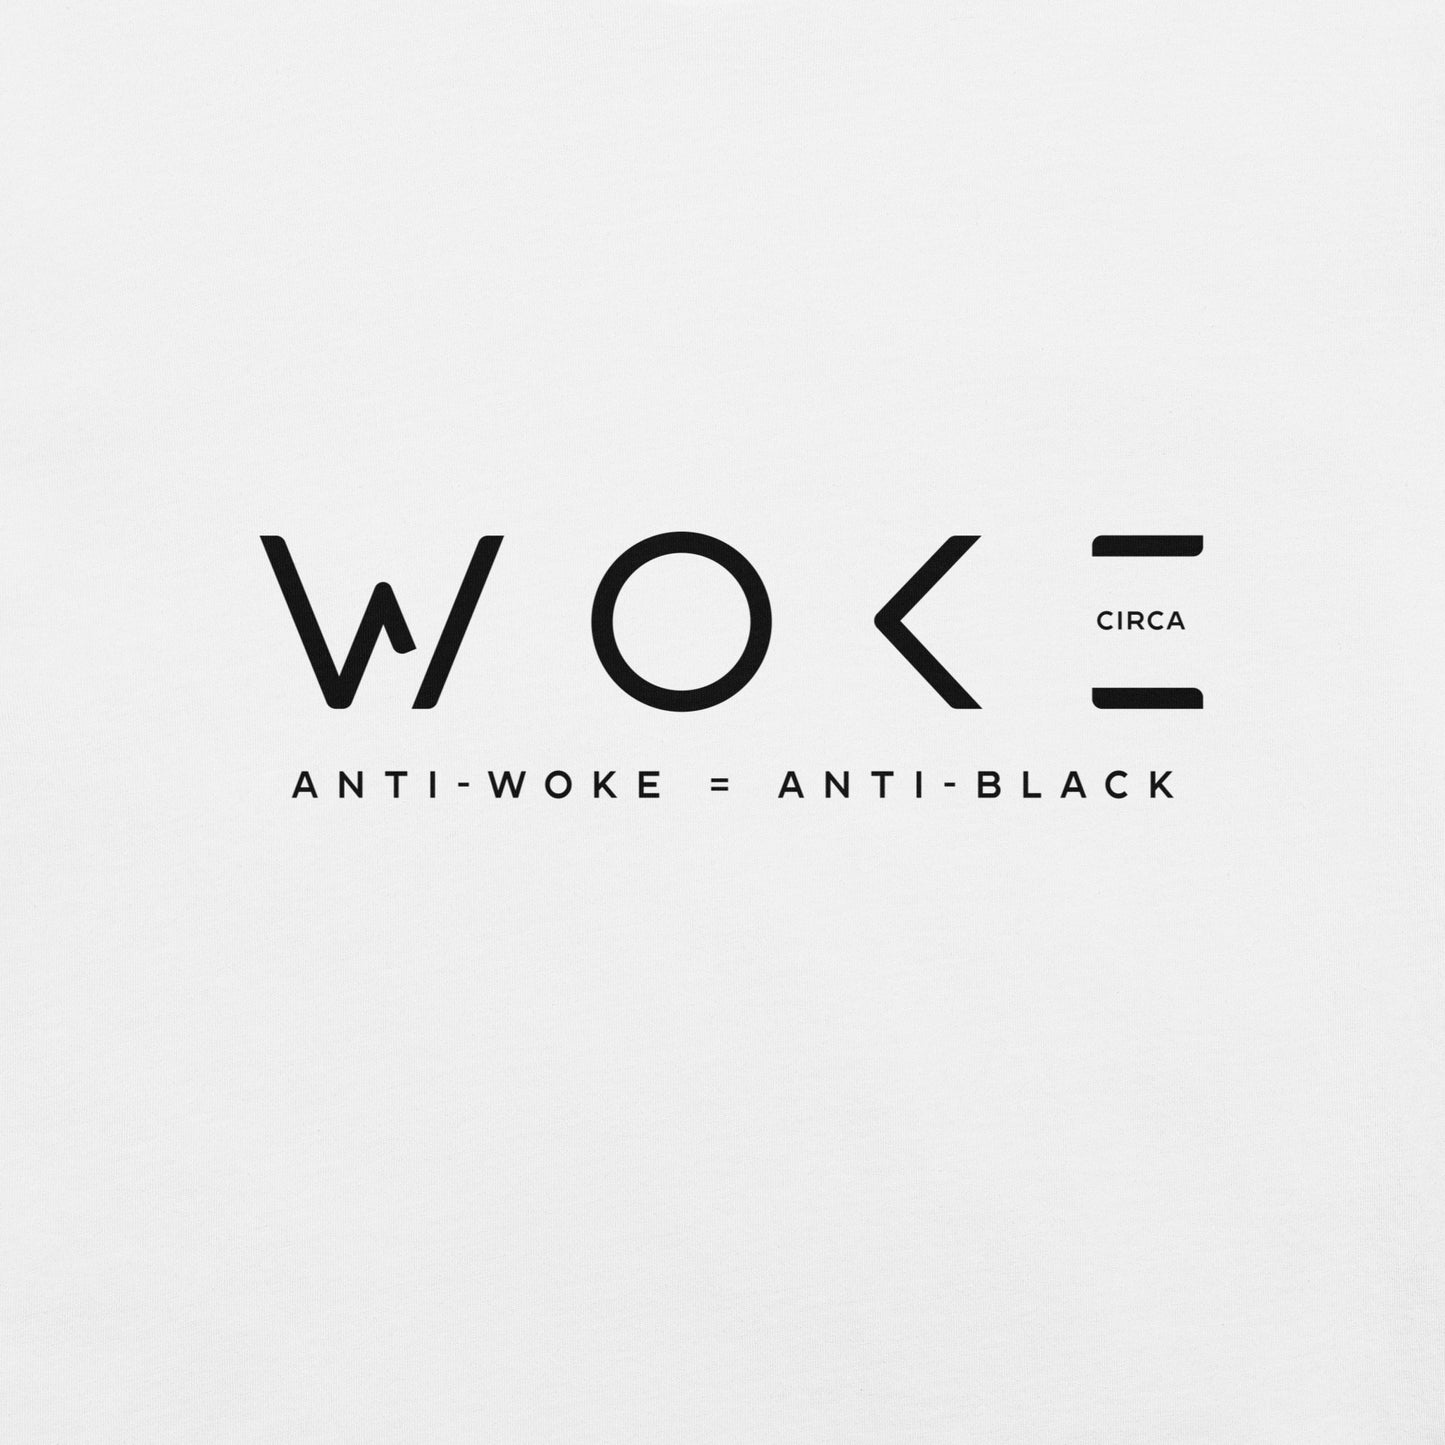 Anti-Woke = Anti-Black